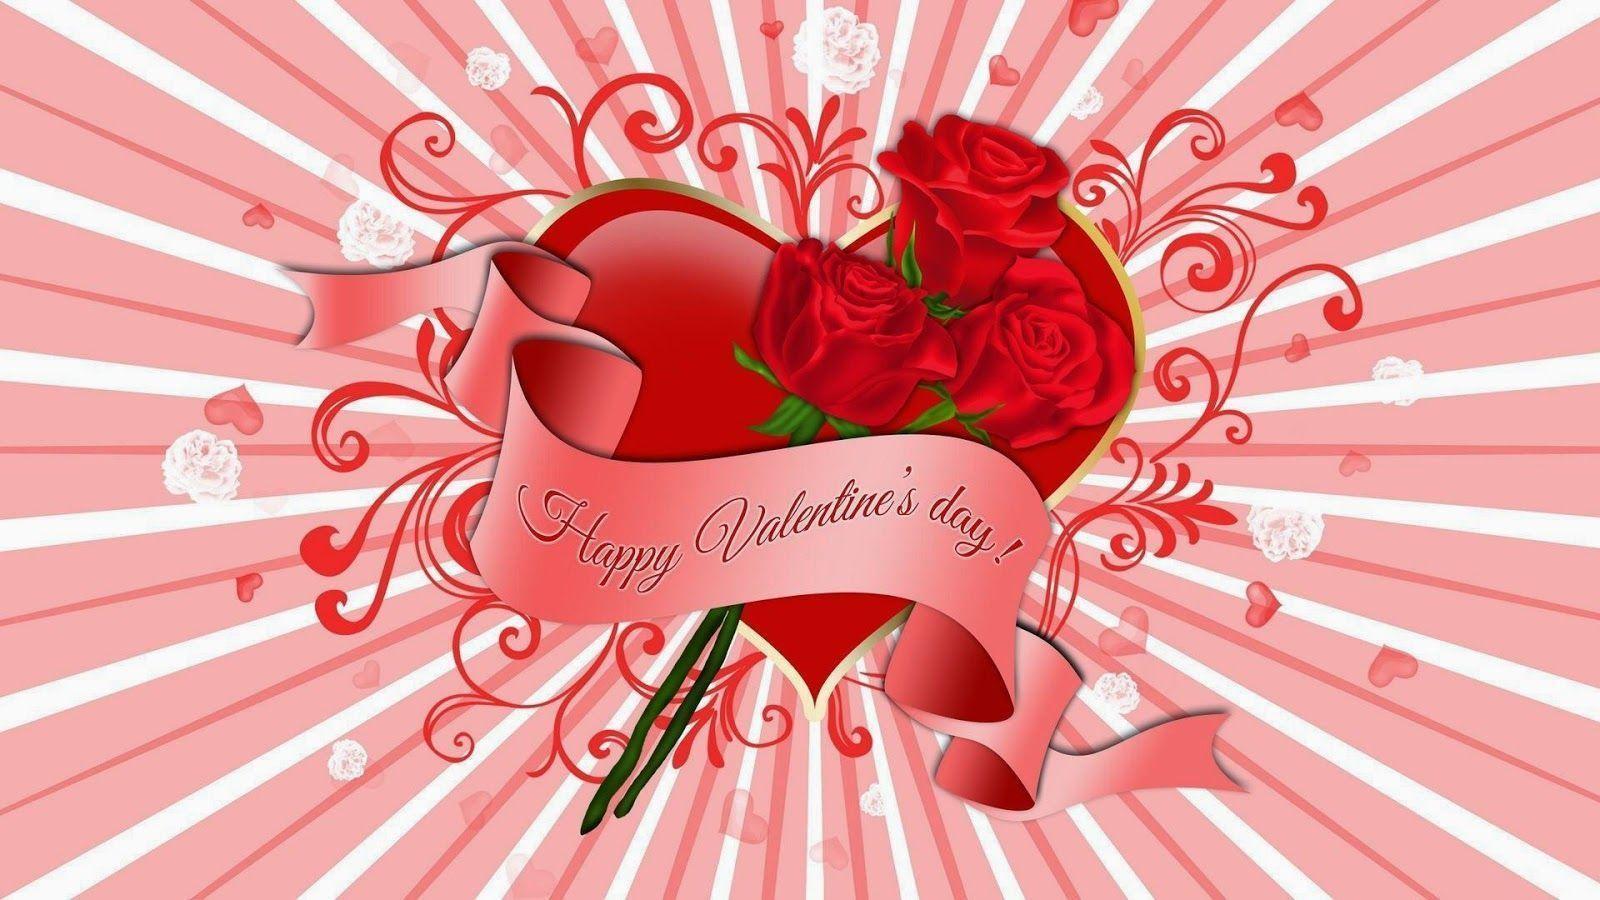 Lovers Corner: Happy Valentines Day Rose Wallpaper 2015